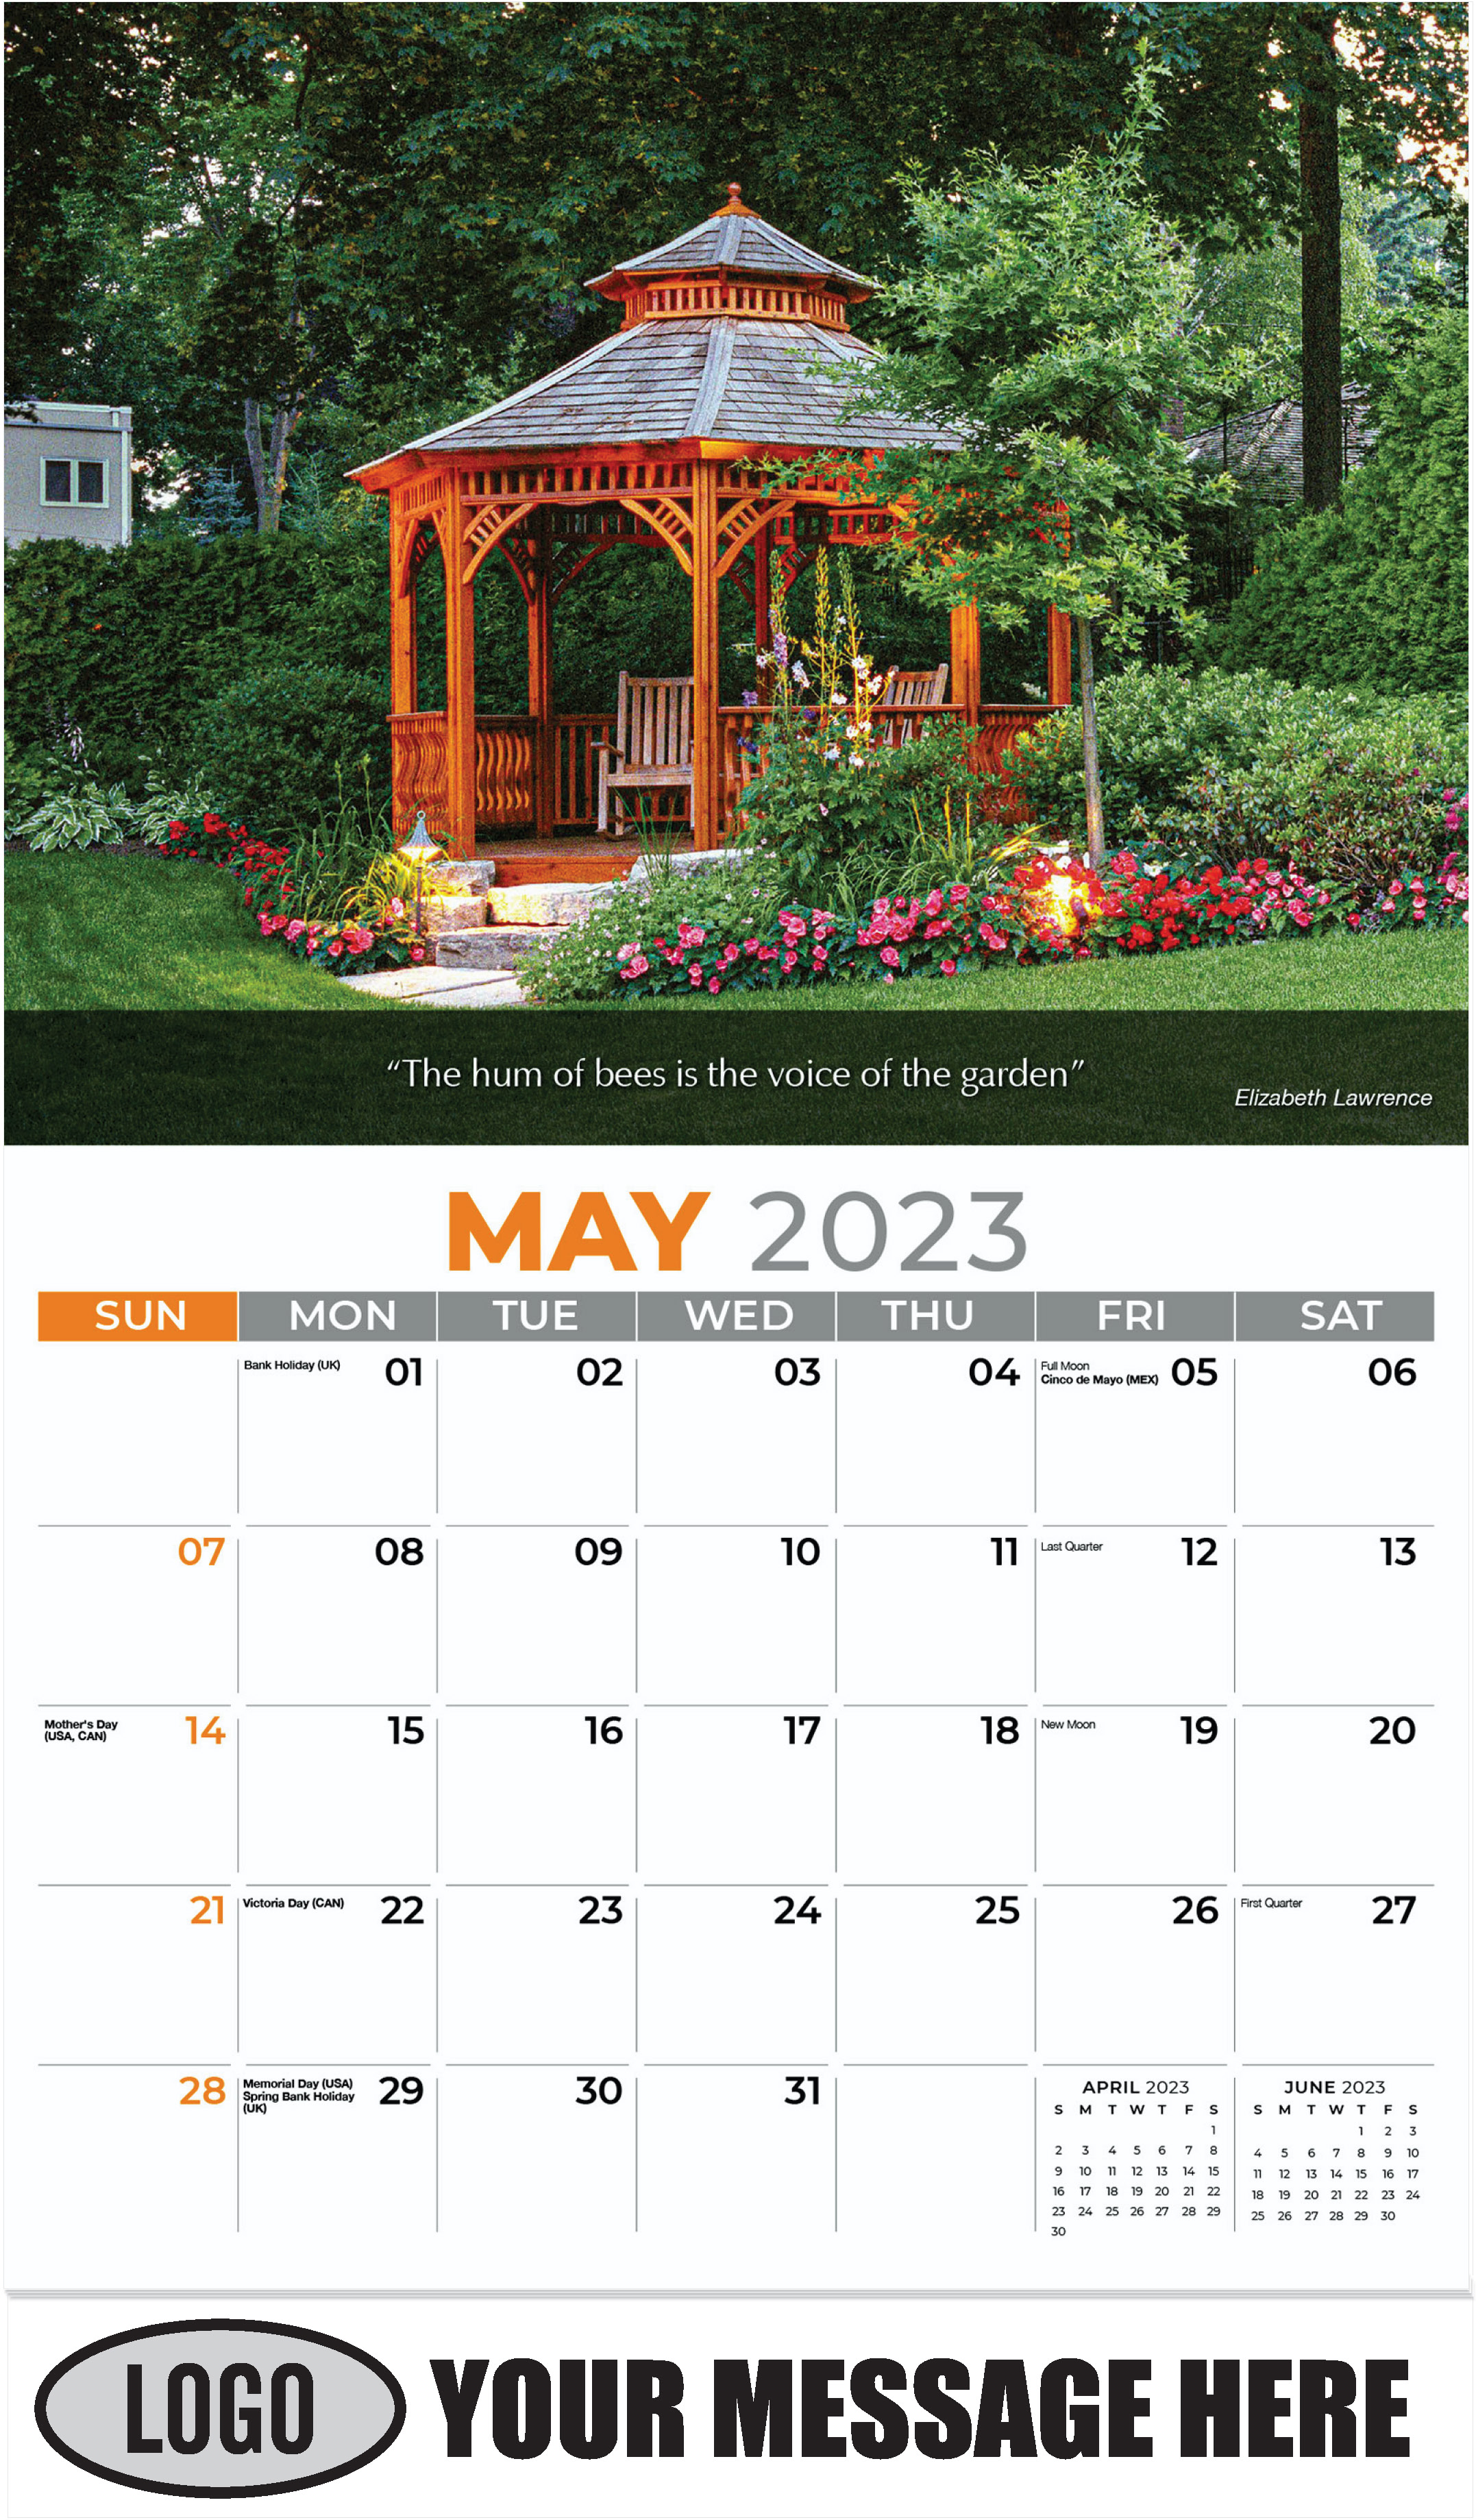 Night Garden with Gazebo - May - Flowers & Gardens 2023 Promotional Calendar